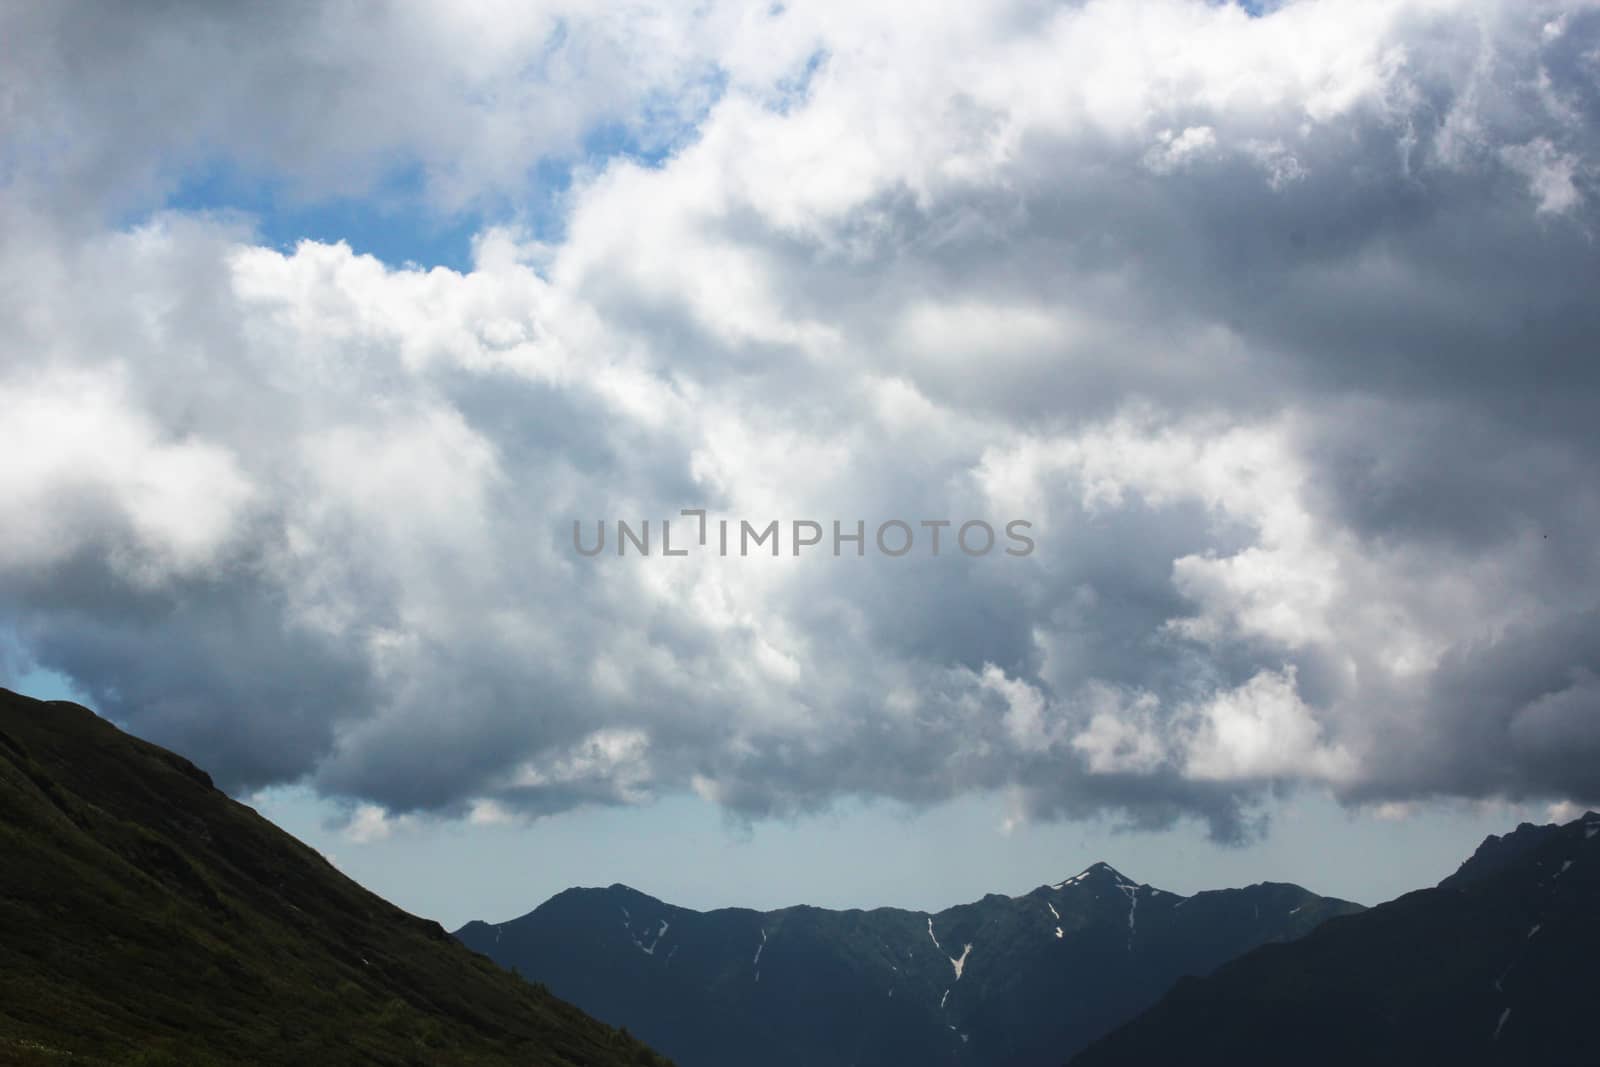 Mountain cloudscape and landscape in Georgia. Horizon in mountain range.